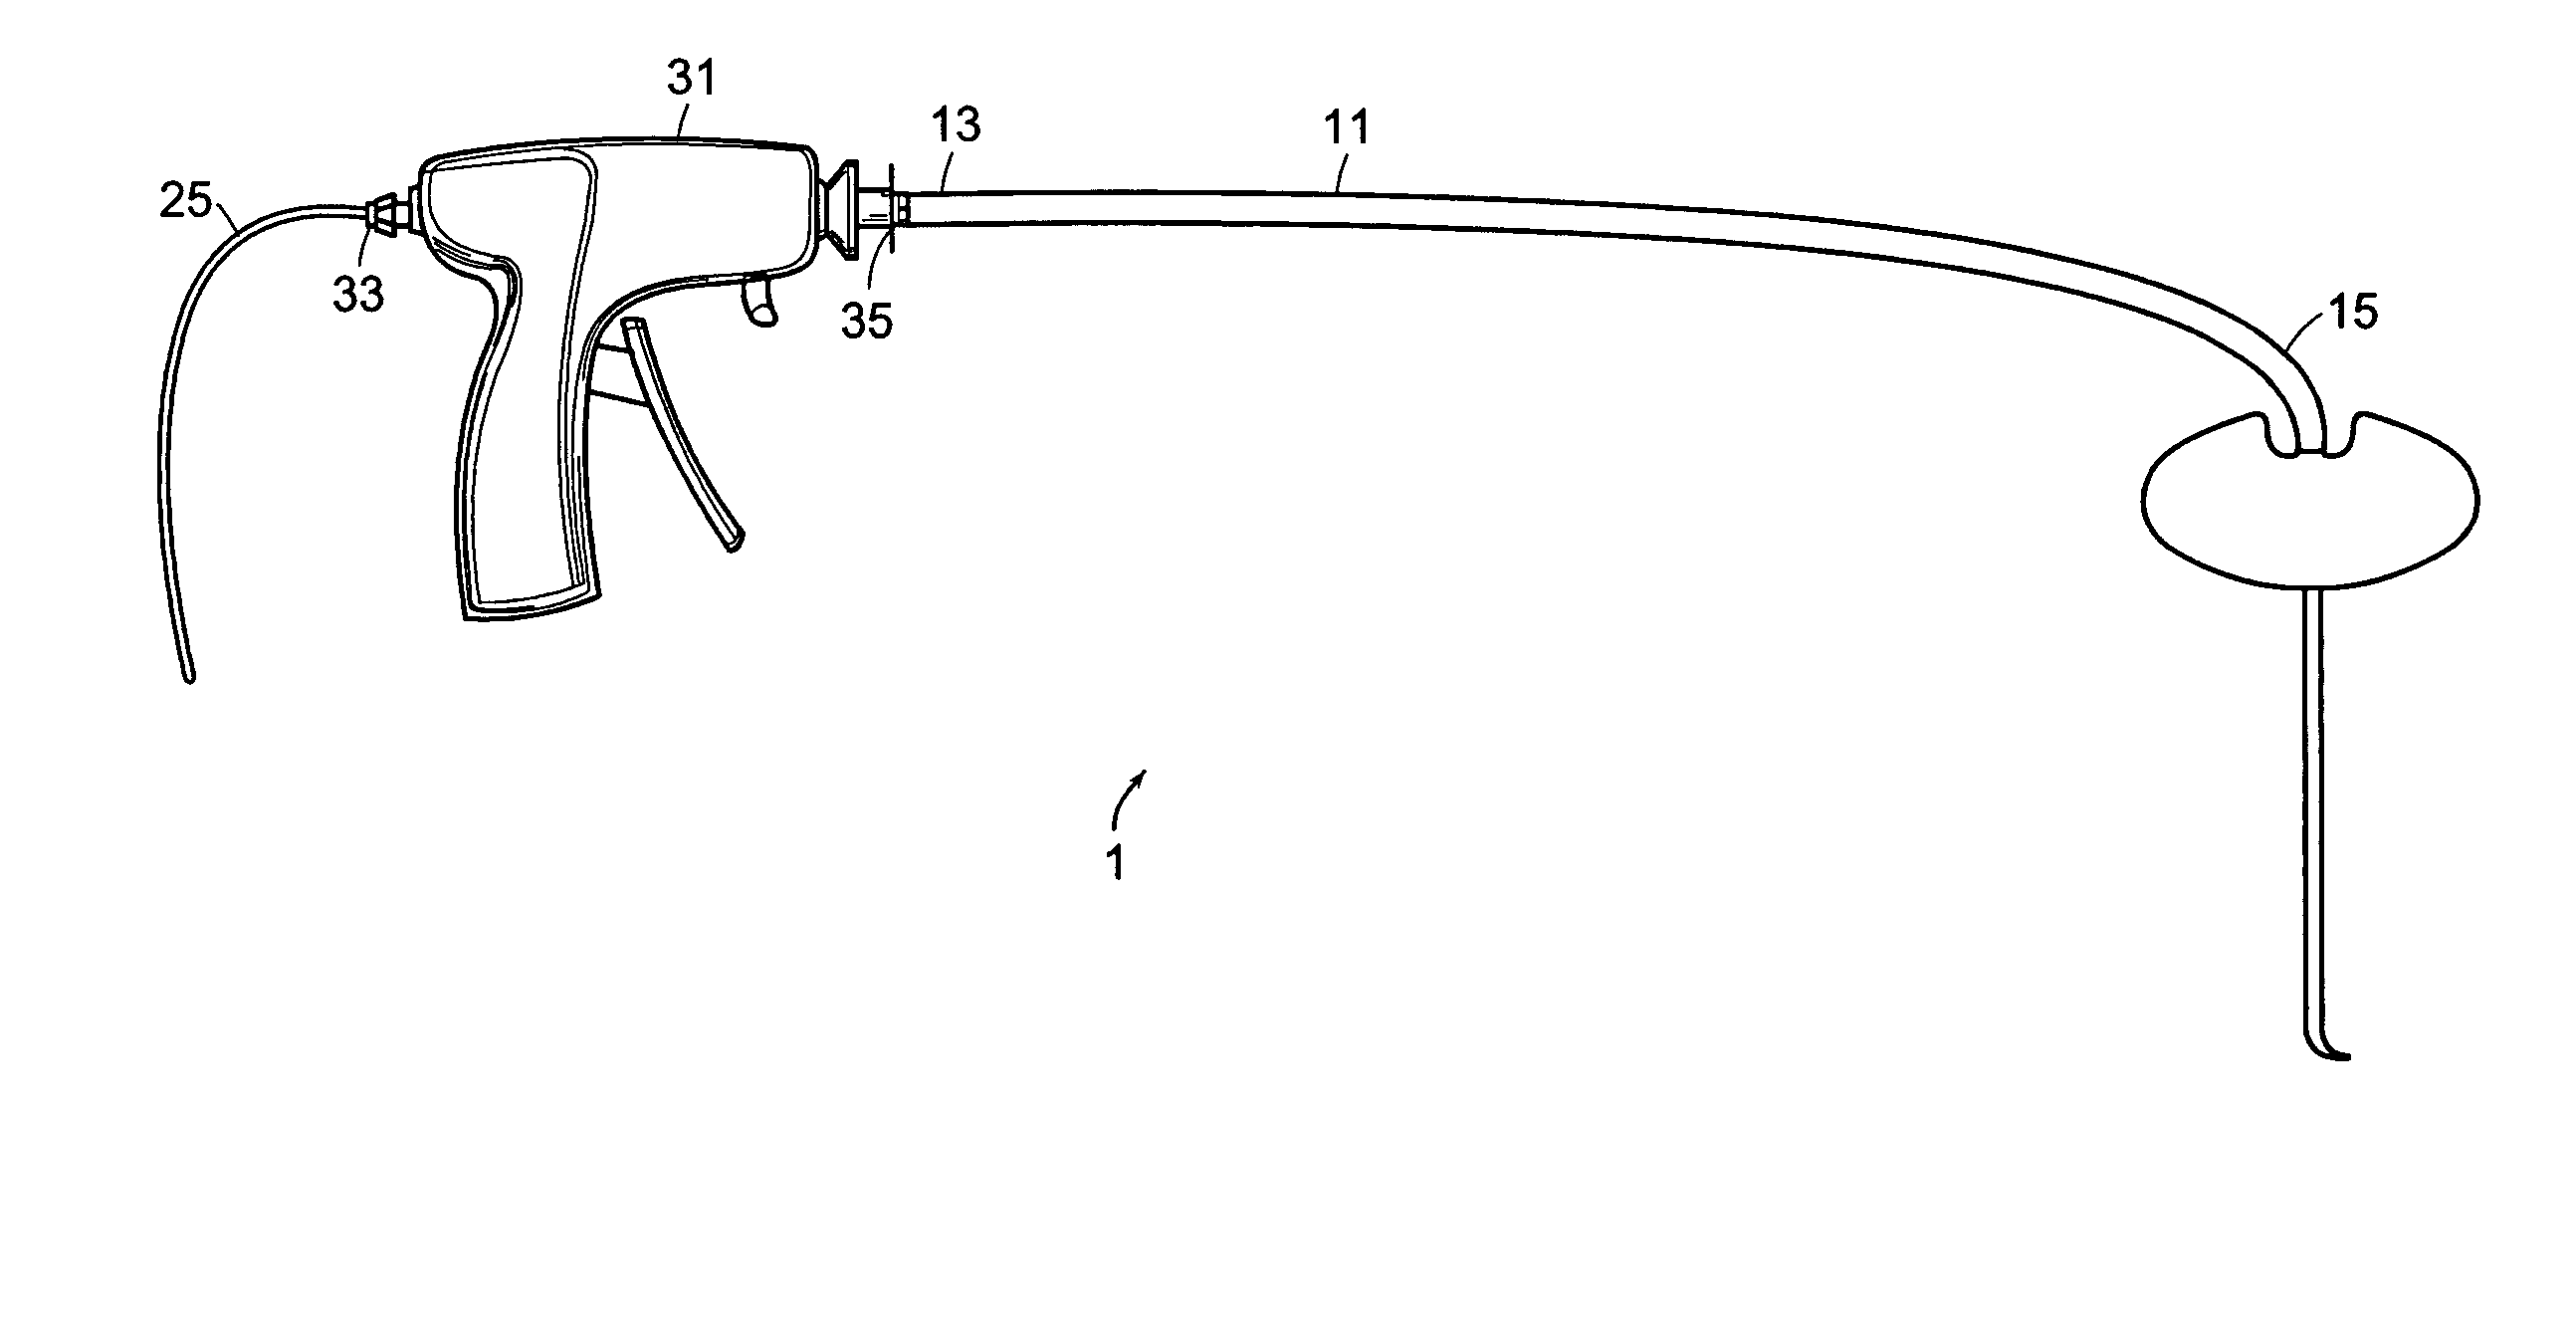 Vertebroplasty device having a flexible plunger